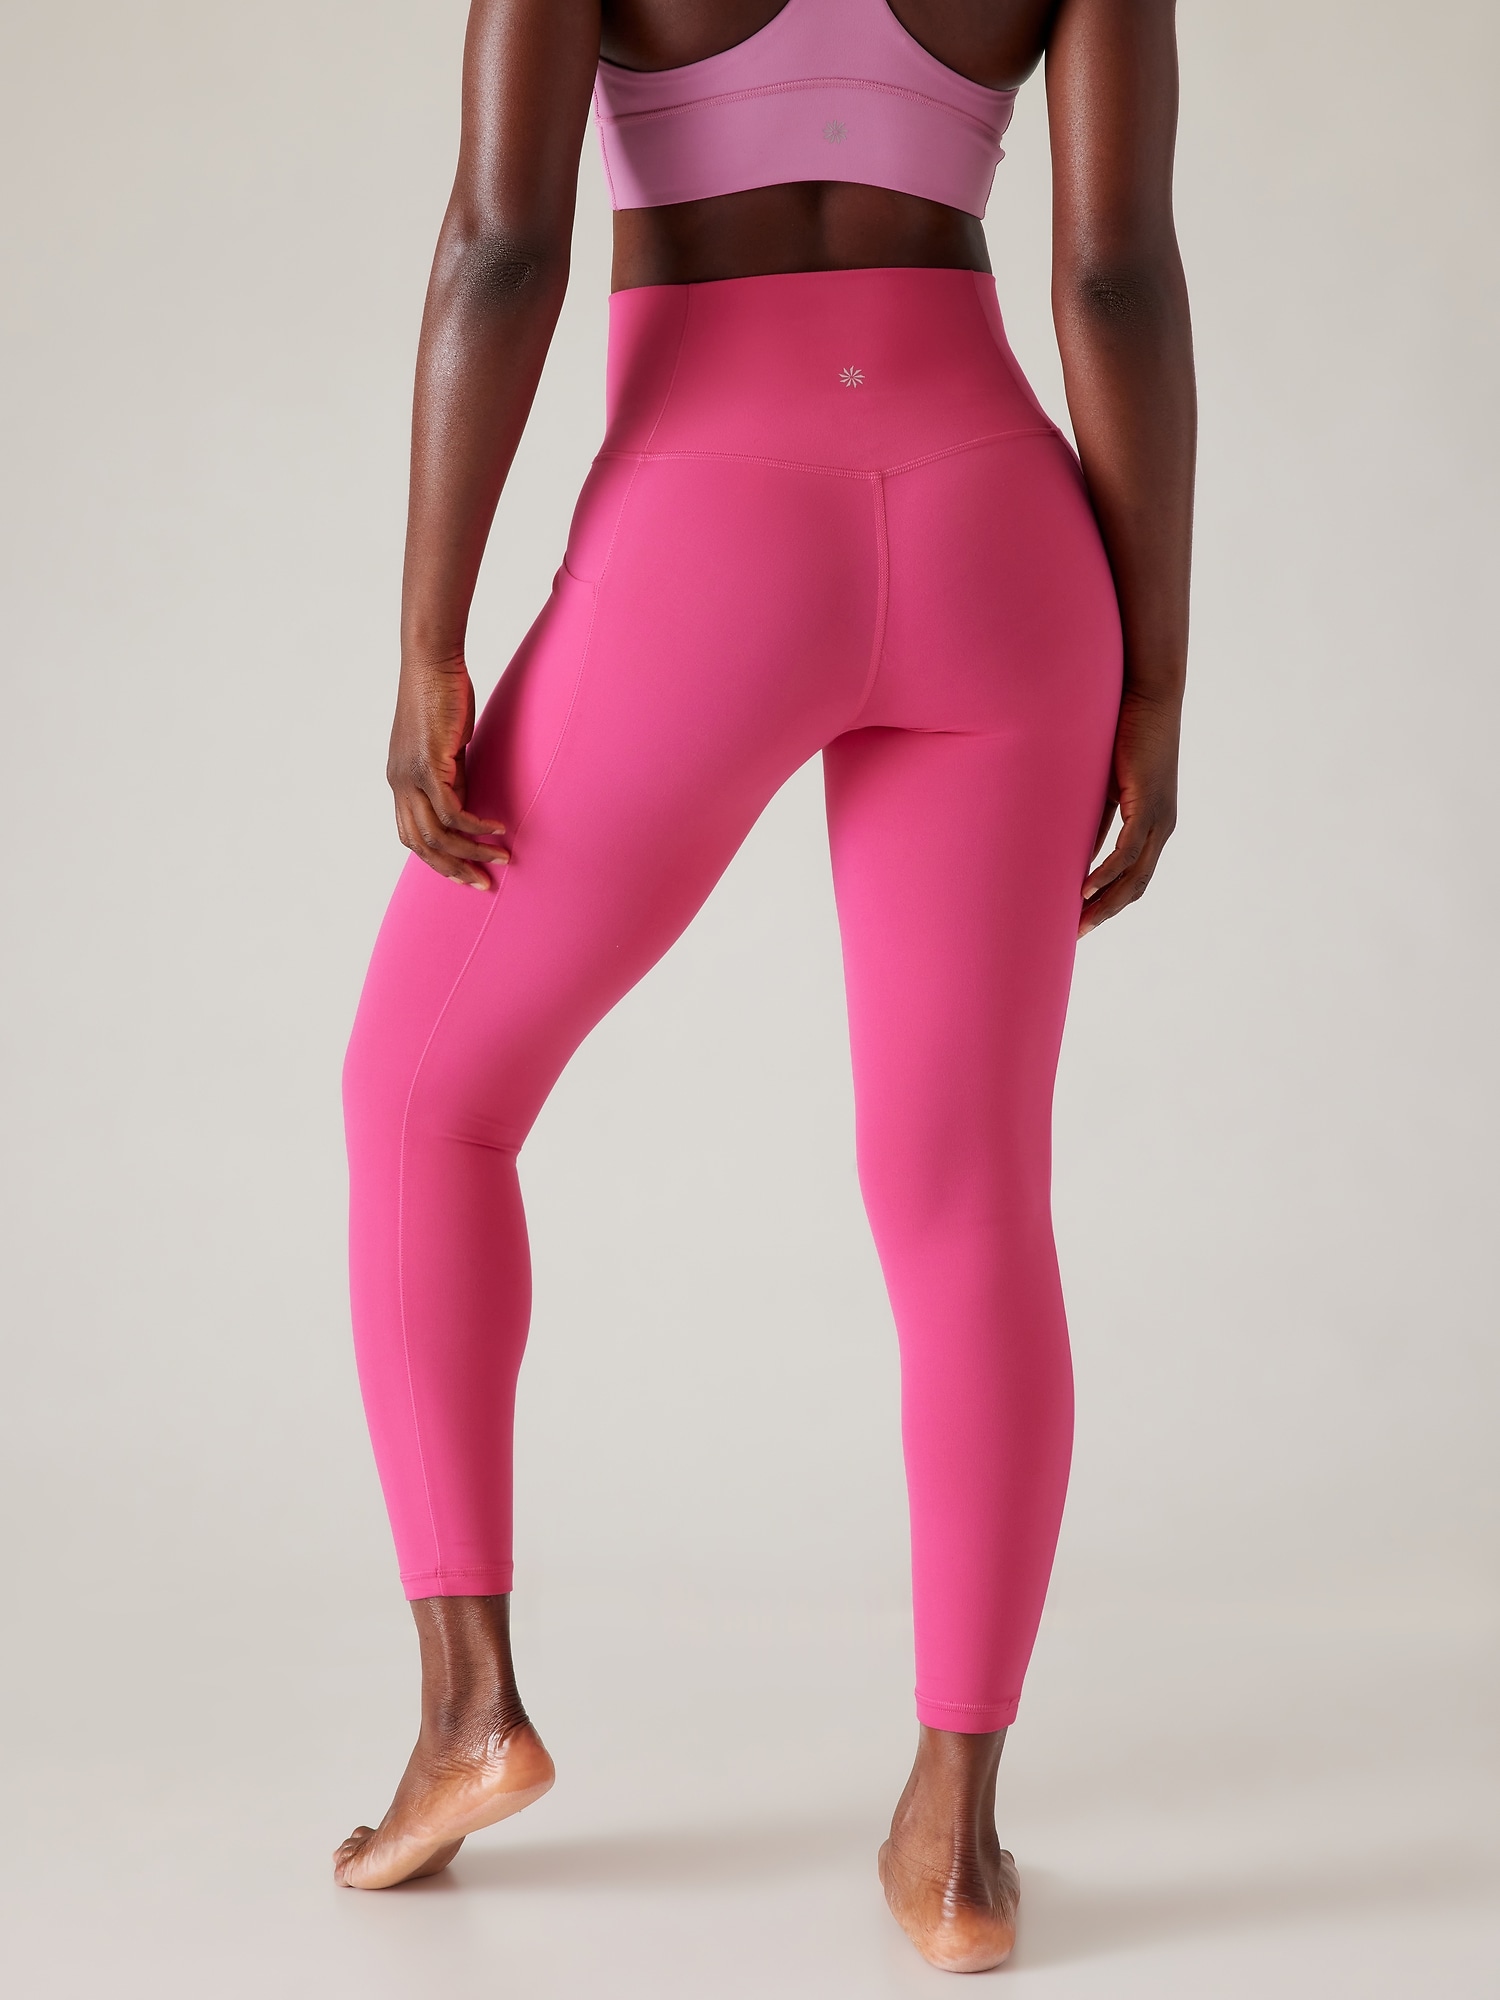 Athleta Multi Color Pink Leggings Size L - 65% off